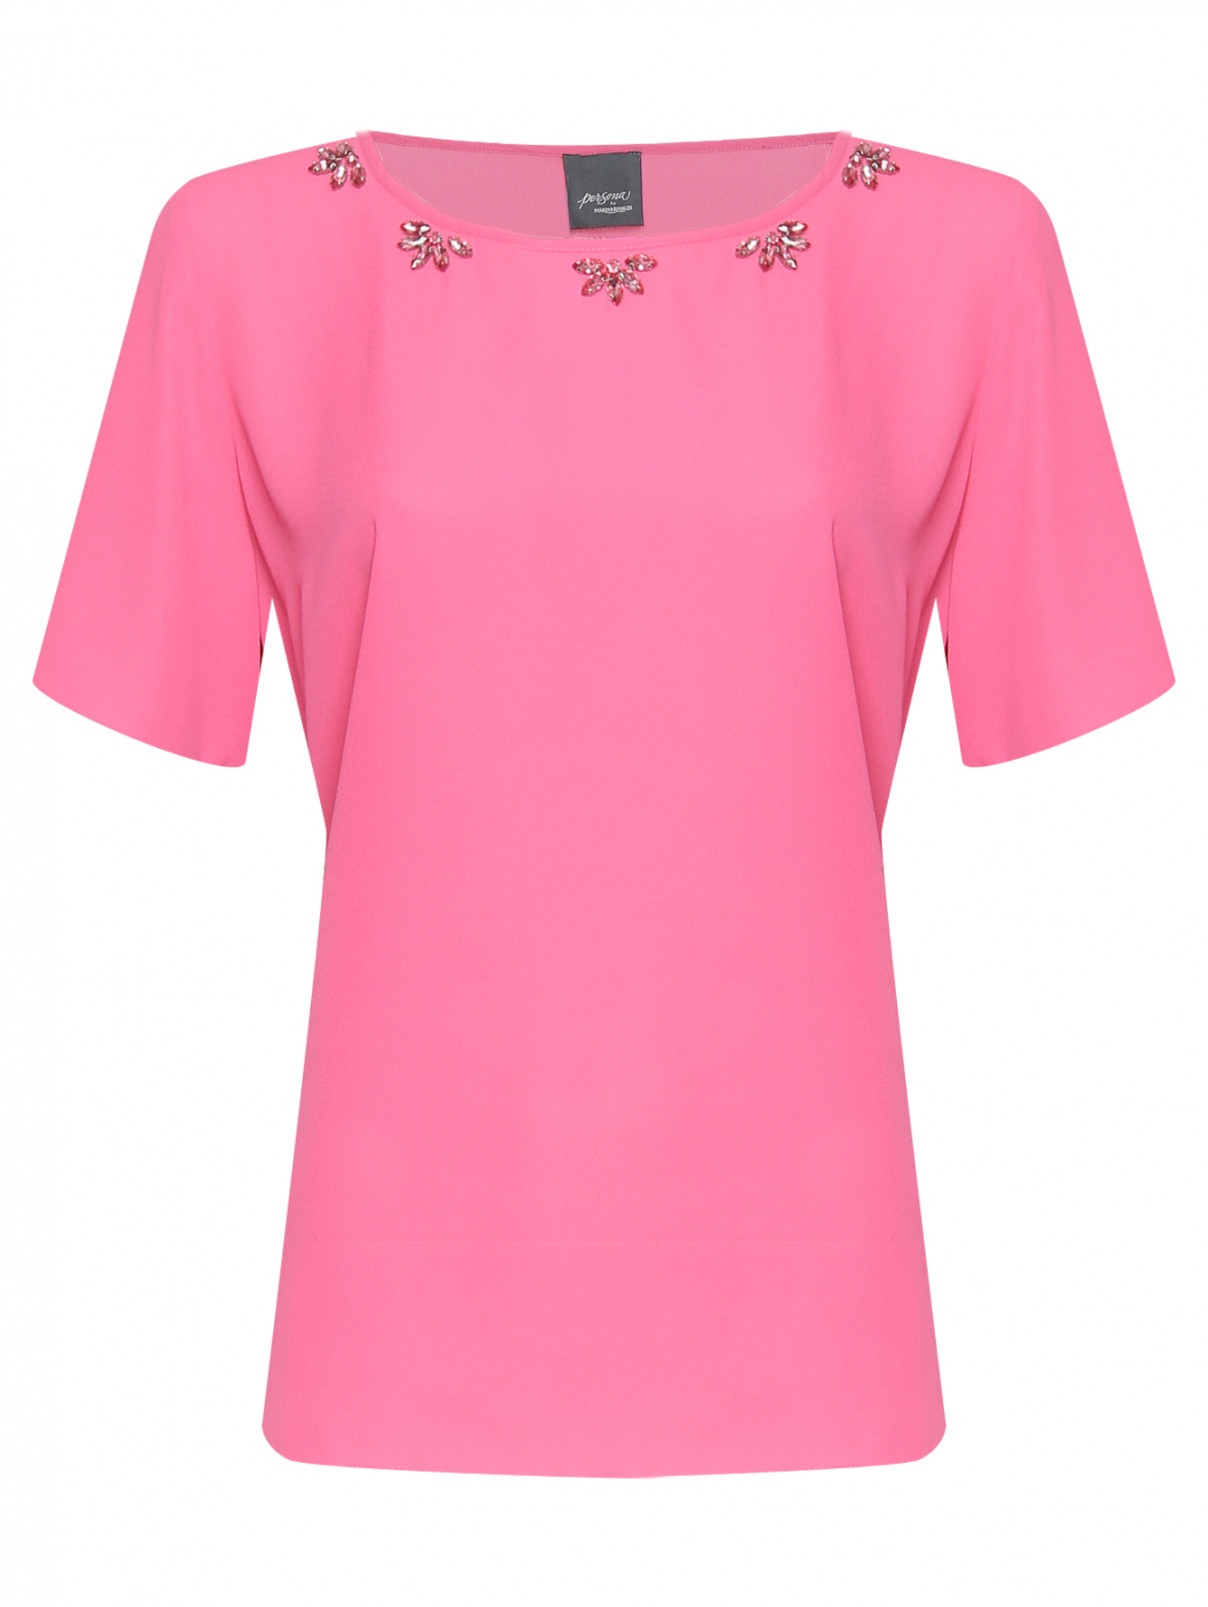 Однотонная блуза с декором Persona by Marina Rinaldi  –  Общий вид